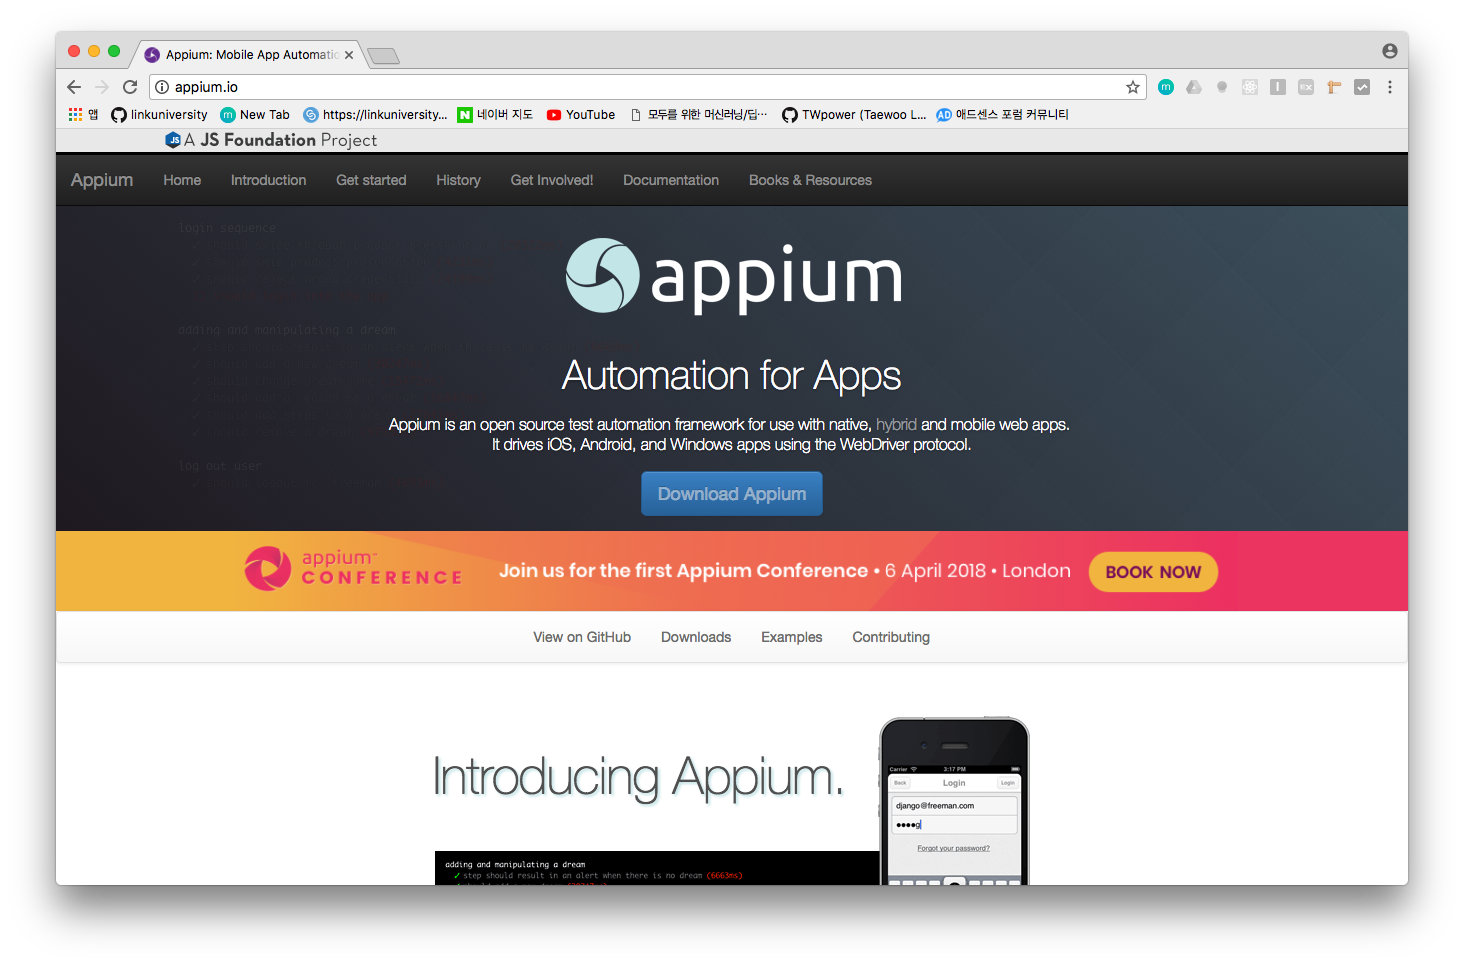 appium_homepage